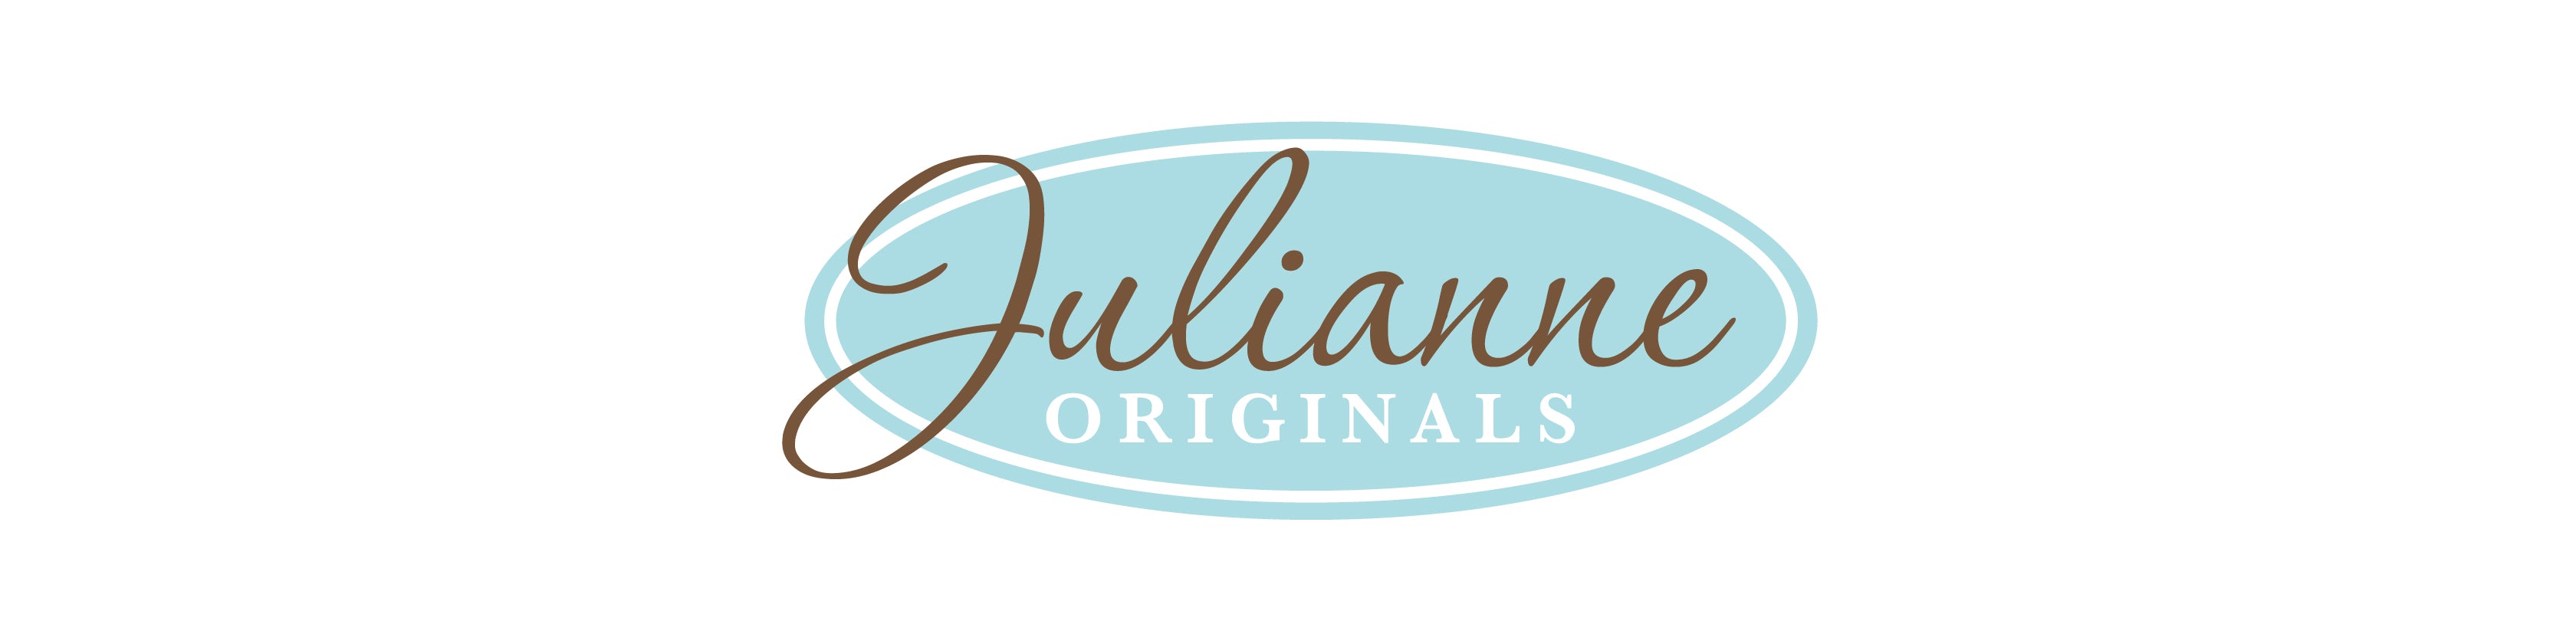 Julianne Originals